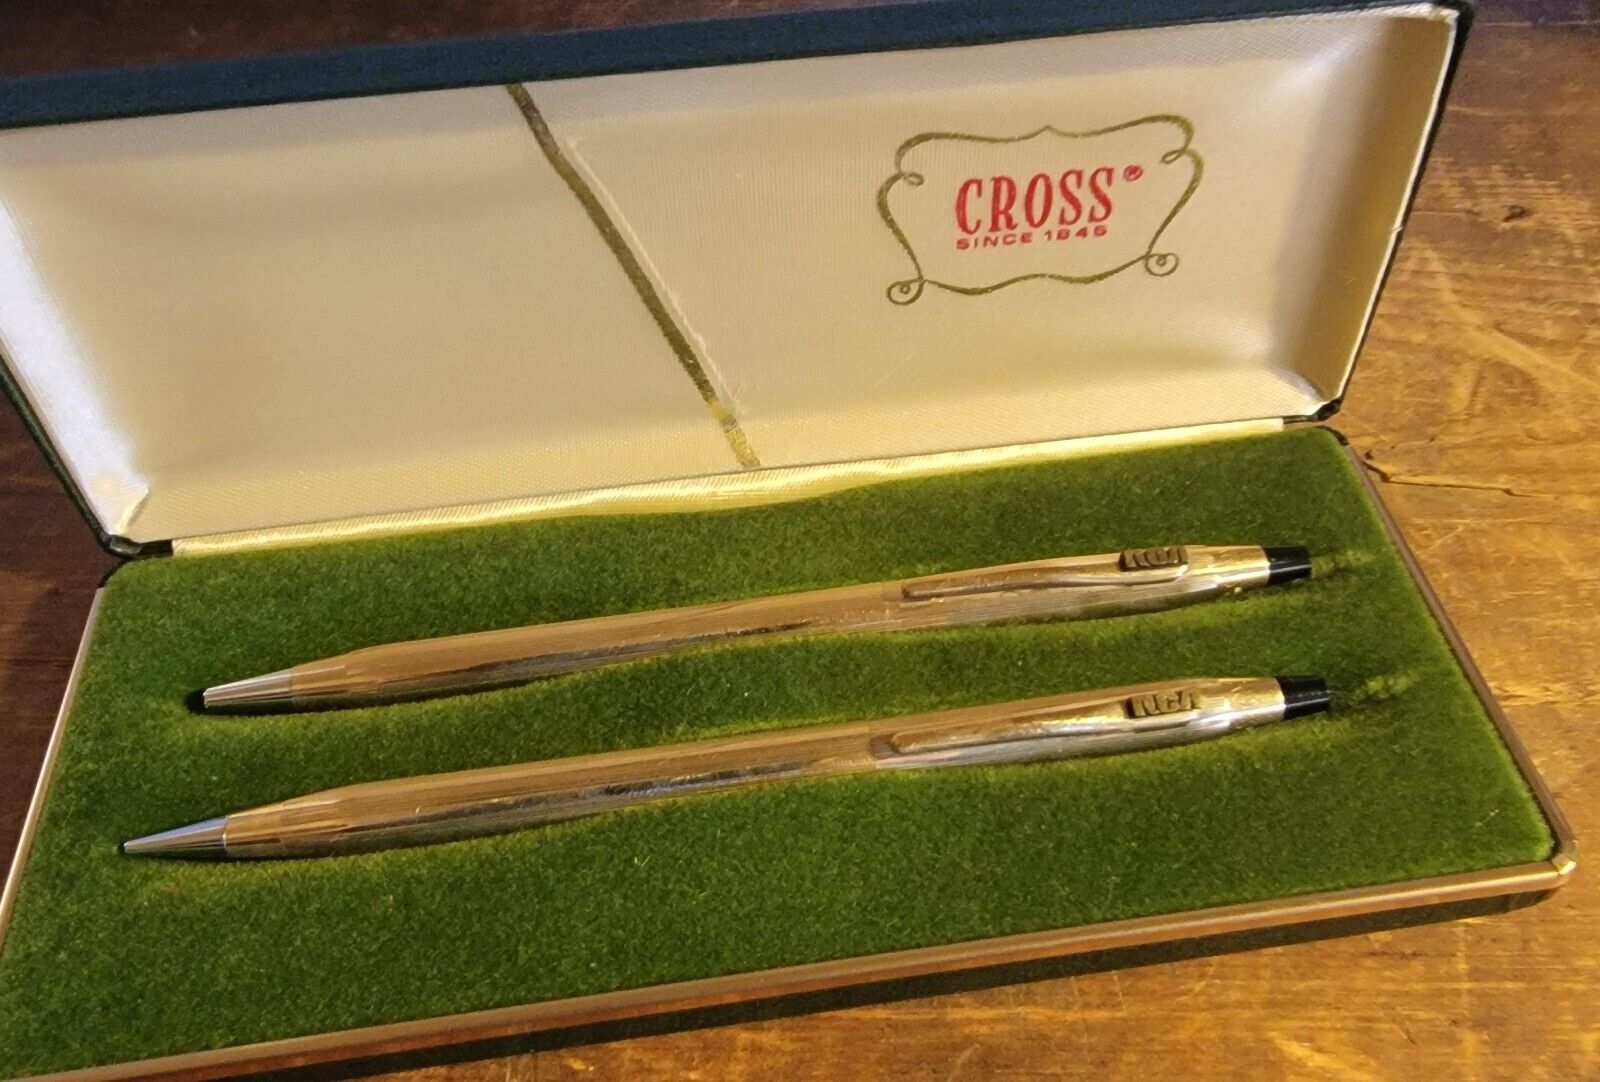 Vintage RCA Cross 10k Gold Filled Rolled Ballpen & Pencil Set with Original Box